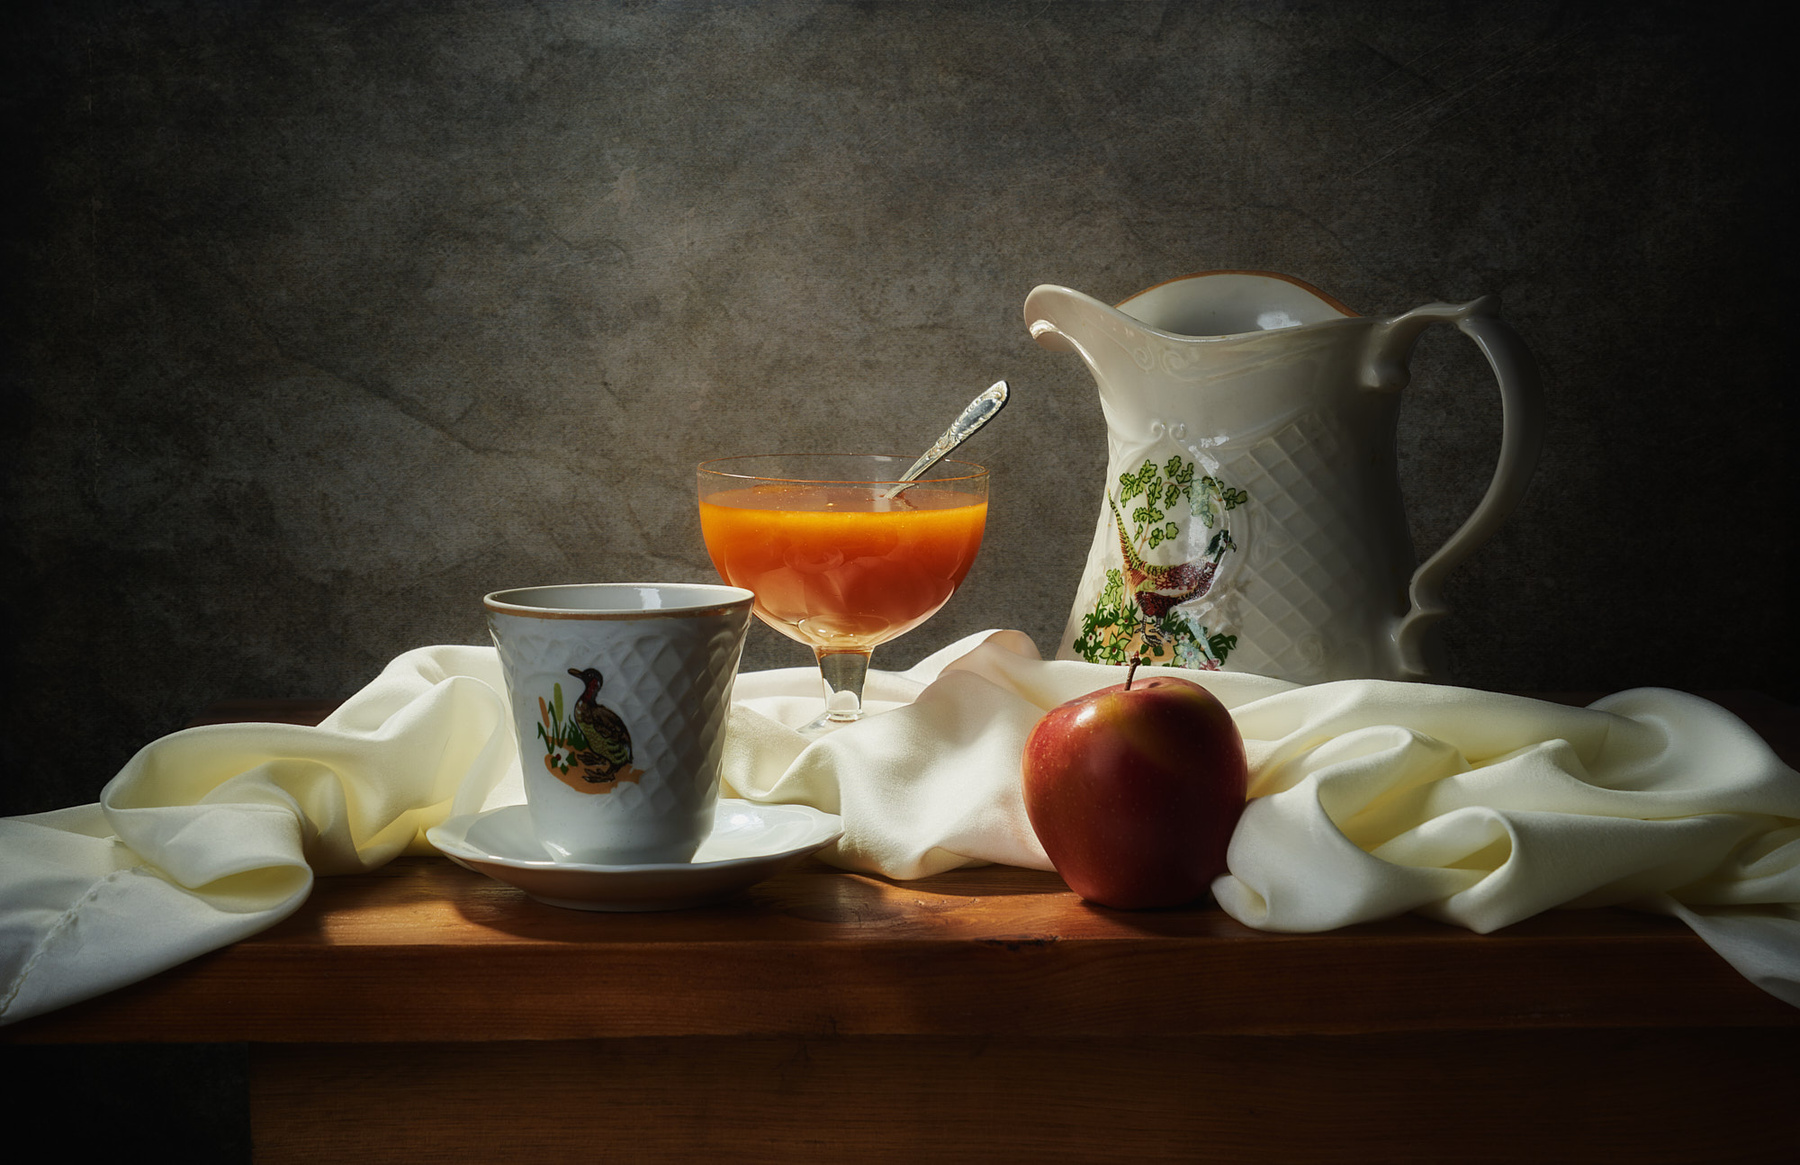 Завтрак с мёдом и яблоком натюрморт постановка композиция сцена еда посуда мёд яблоко